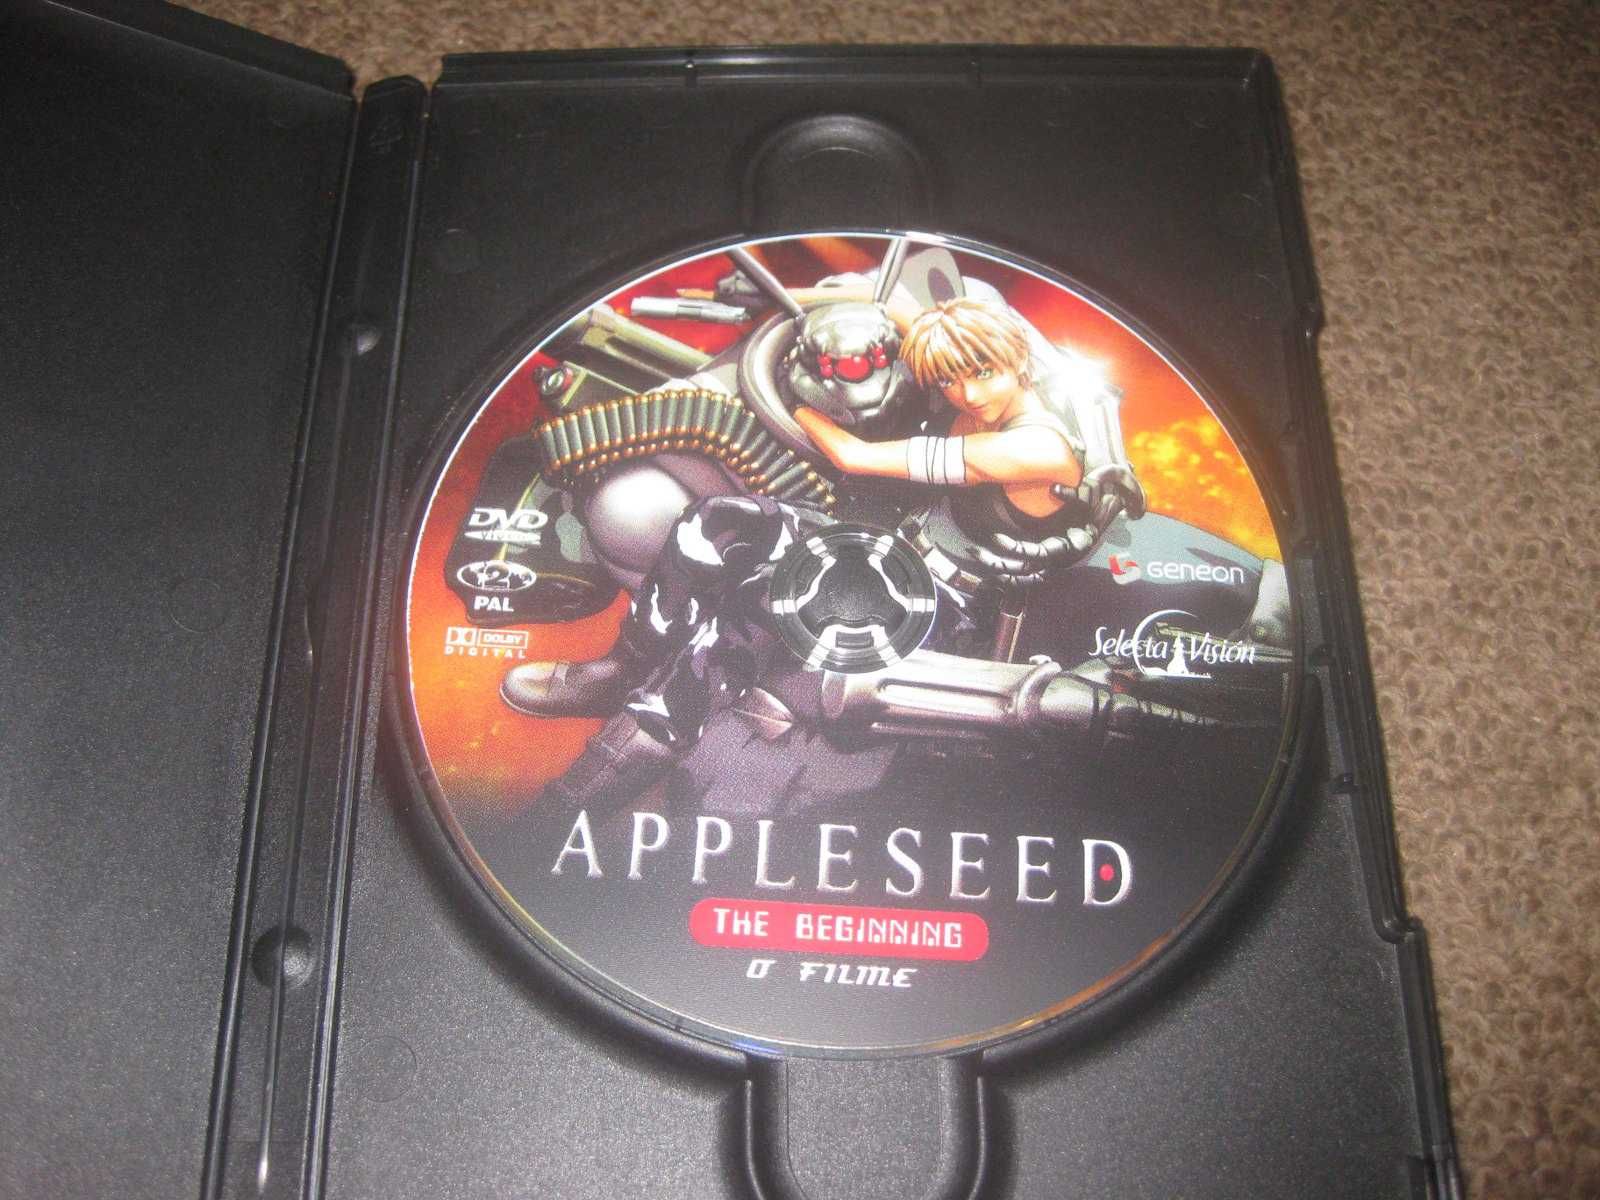 DVD "Appleseed the Beginning- O Filme"